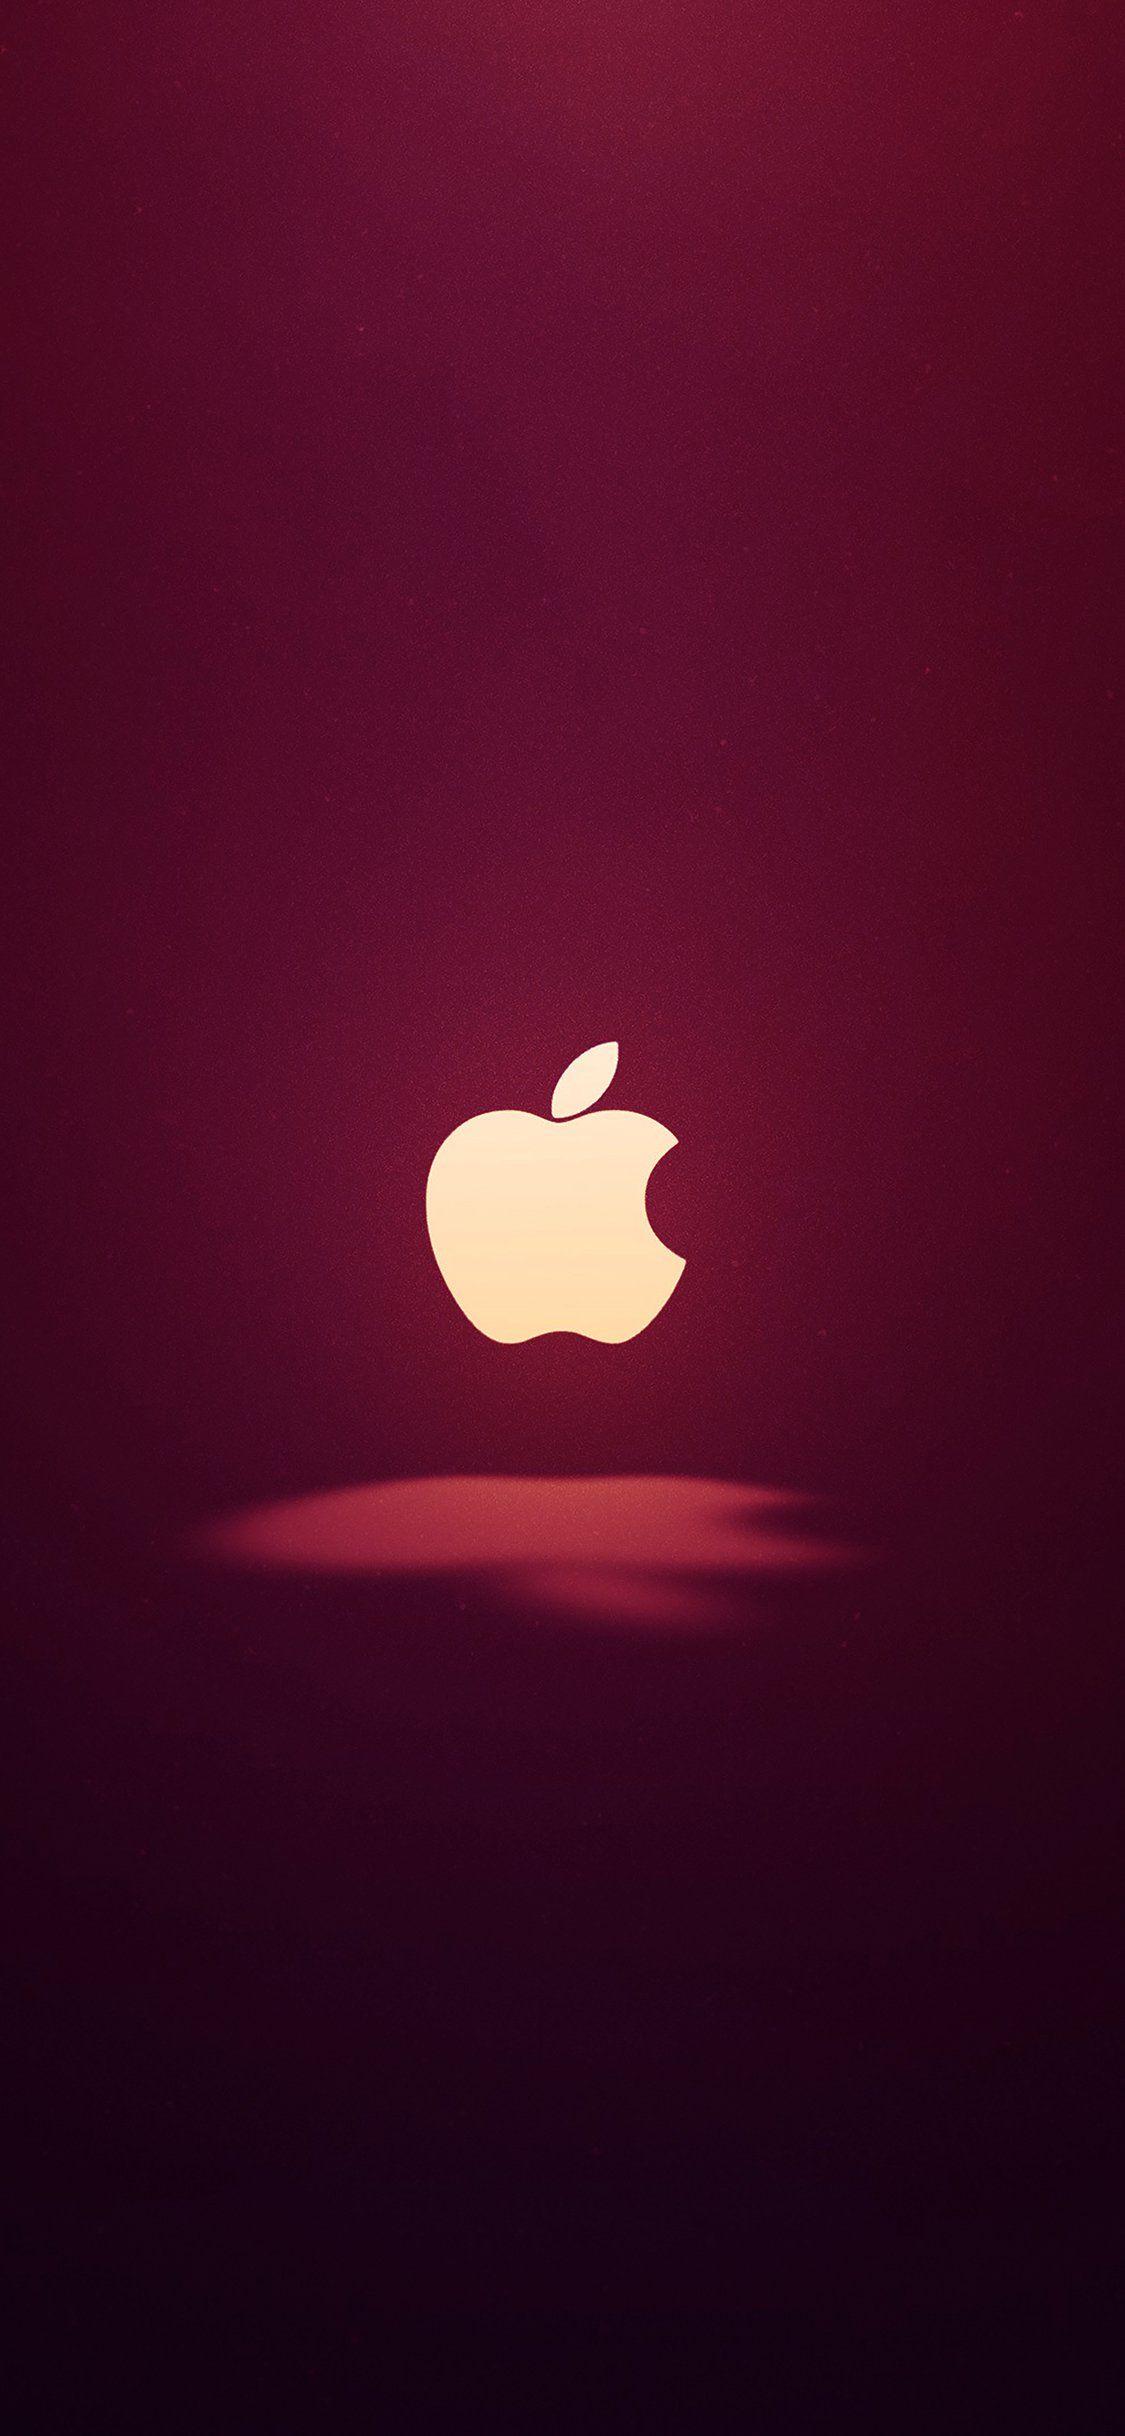 iPhone 8 wallpaper. apple logo love mania